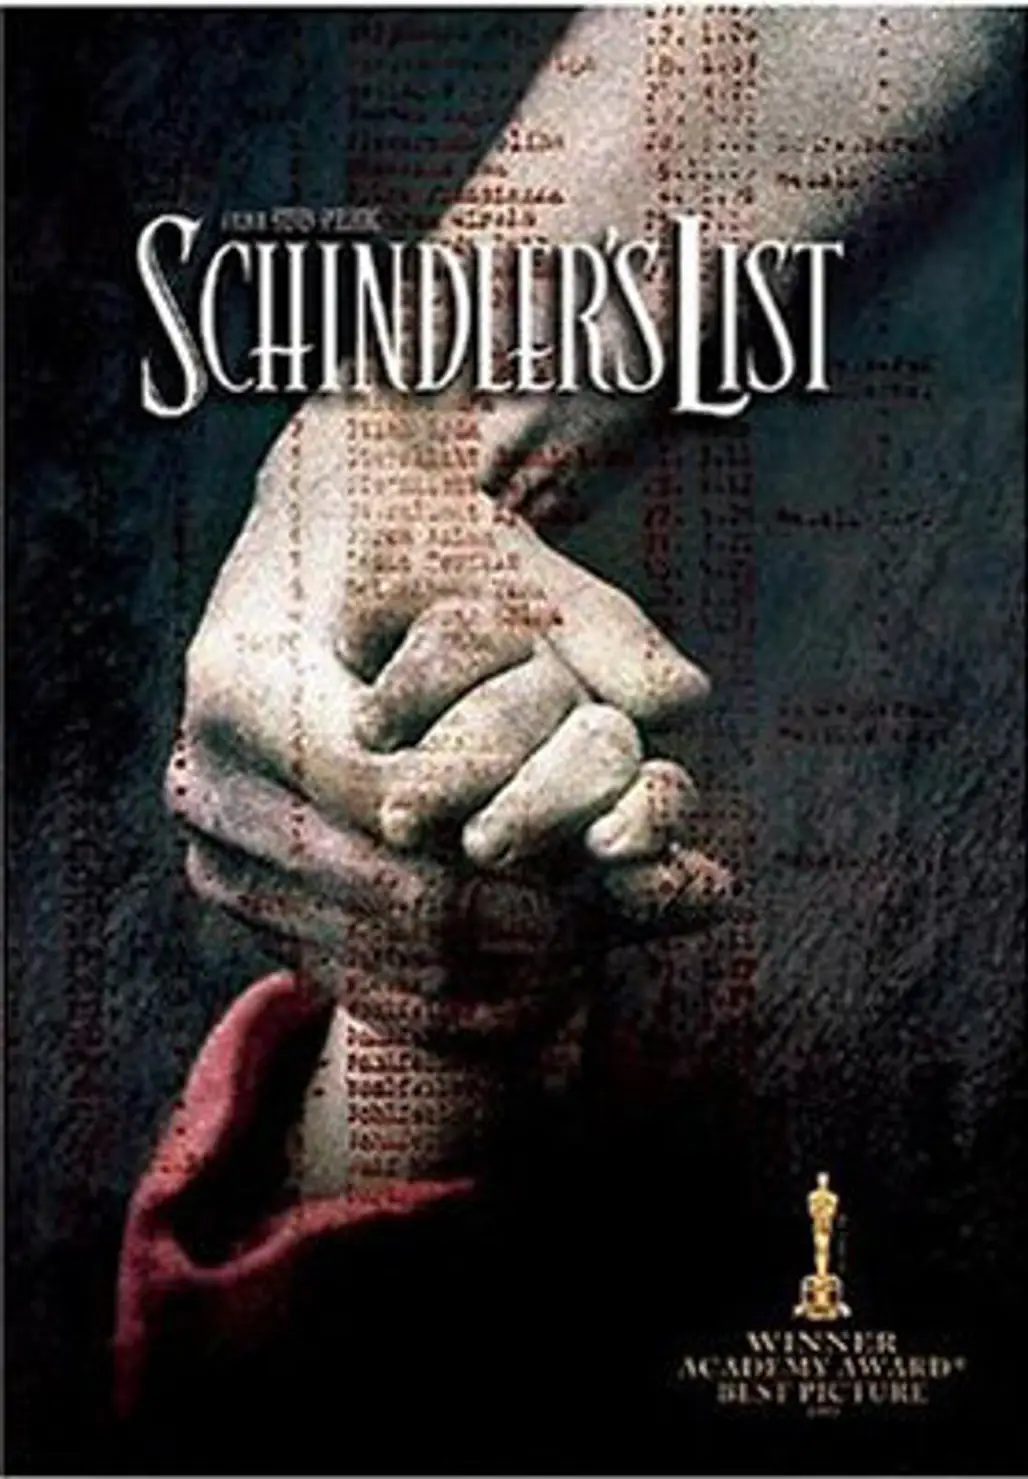 Oskar Schindler in “Schindler’s List”